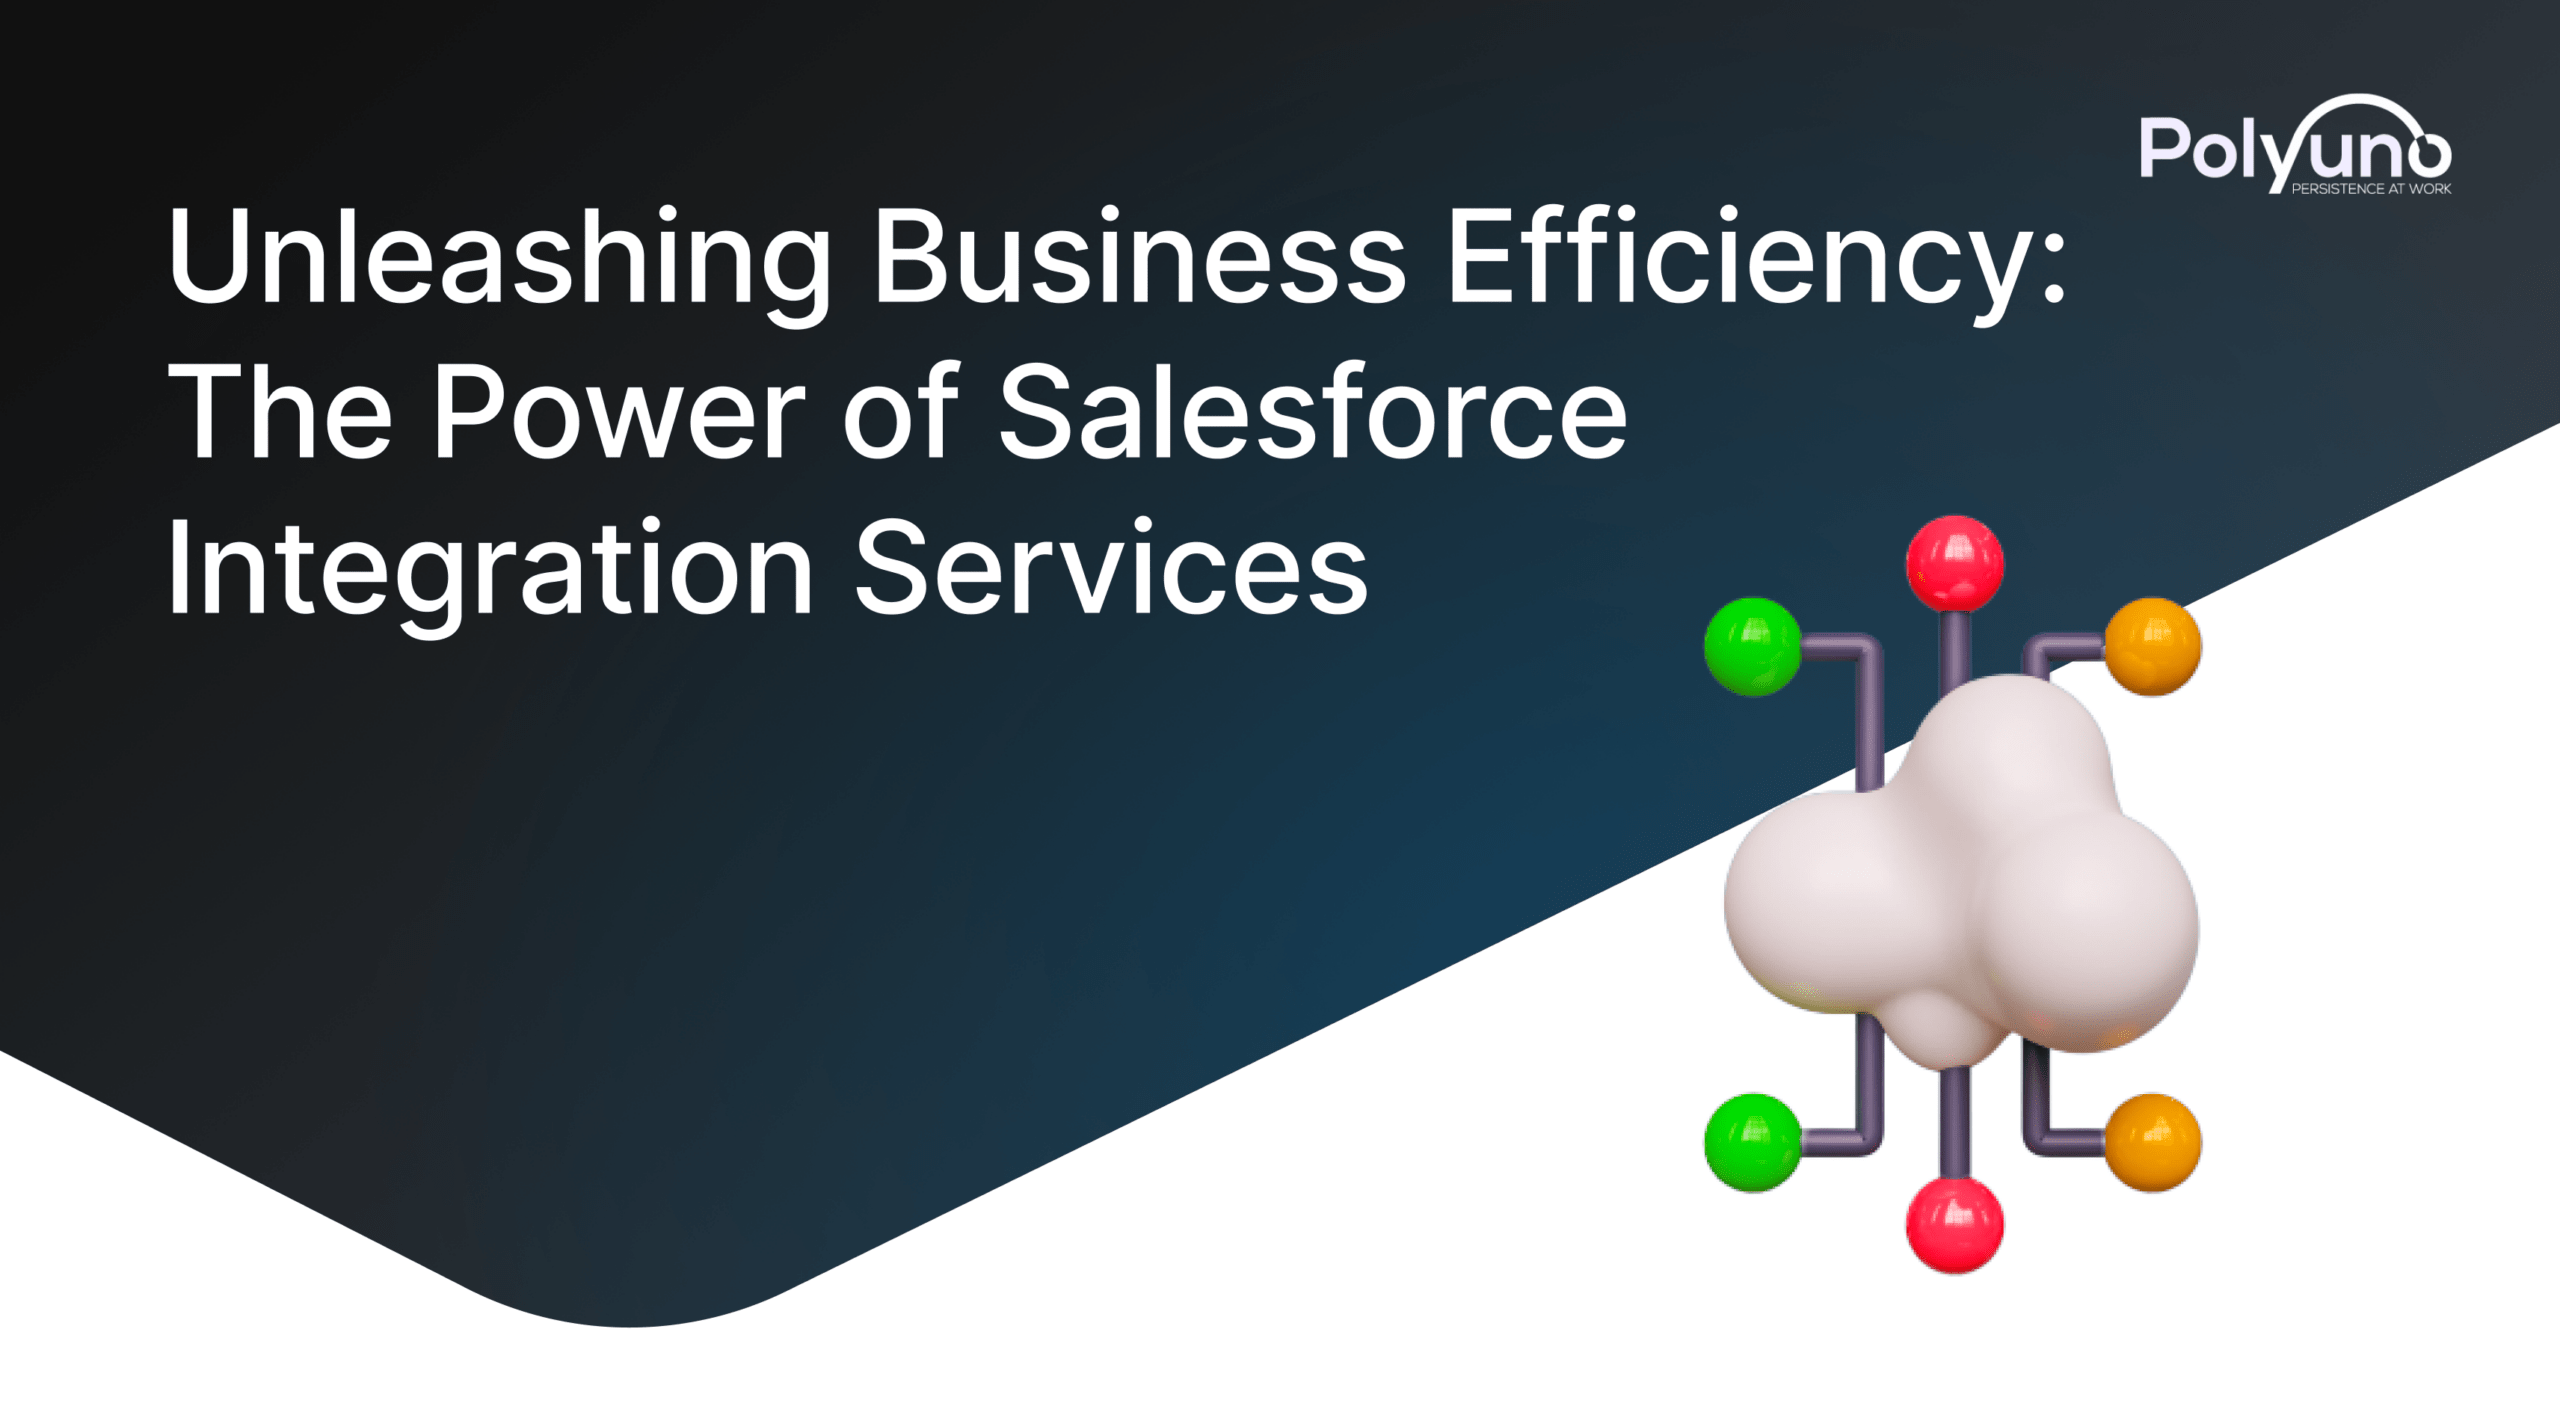 salesforce integration services